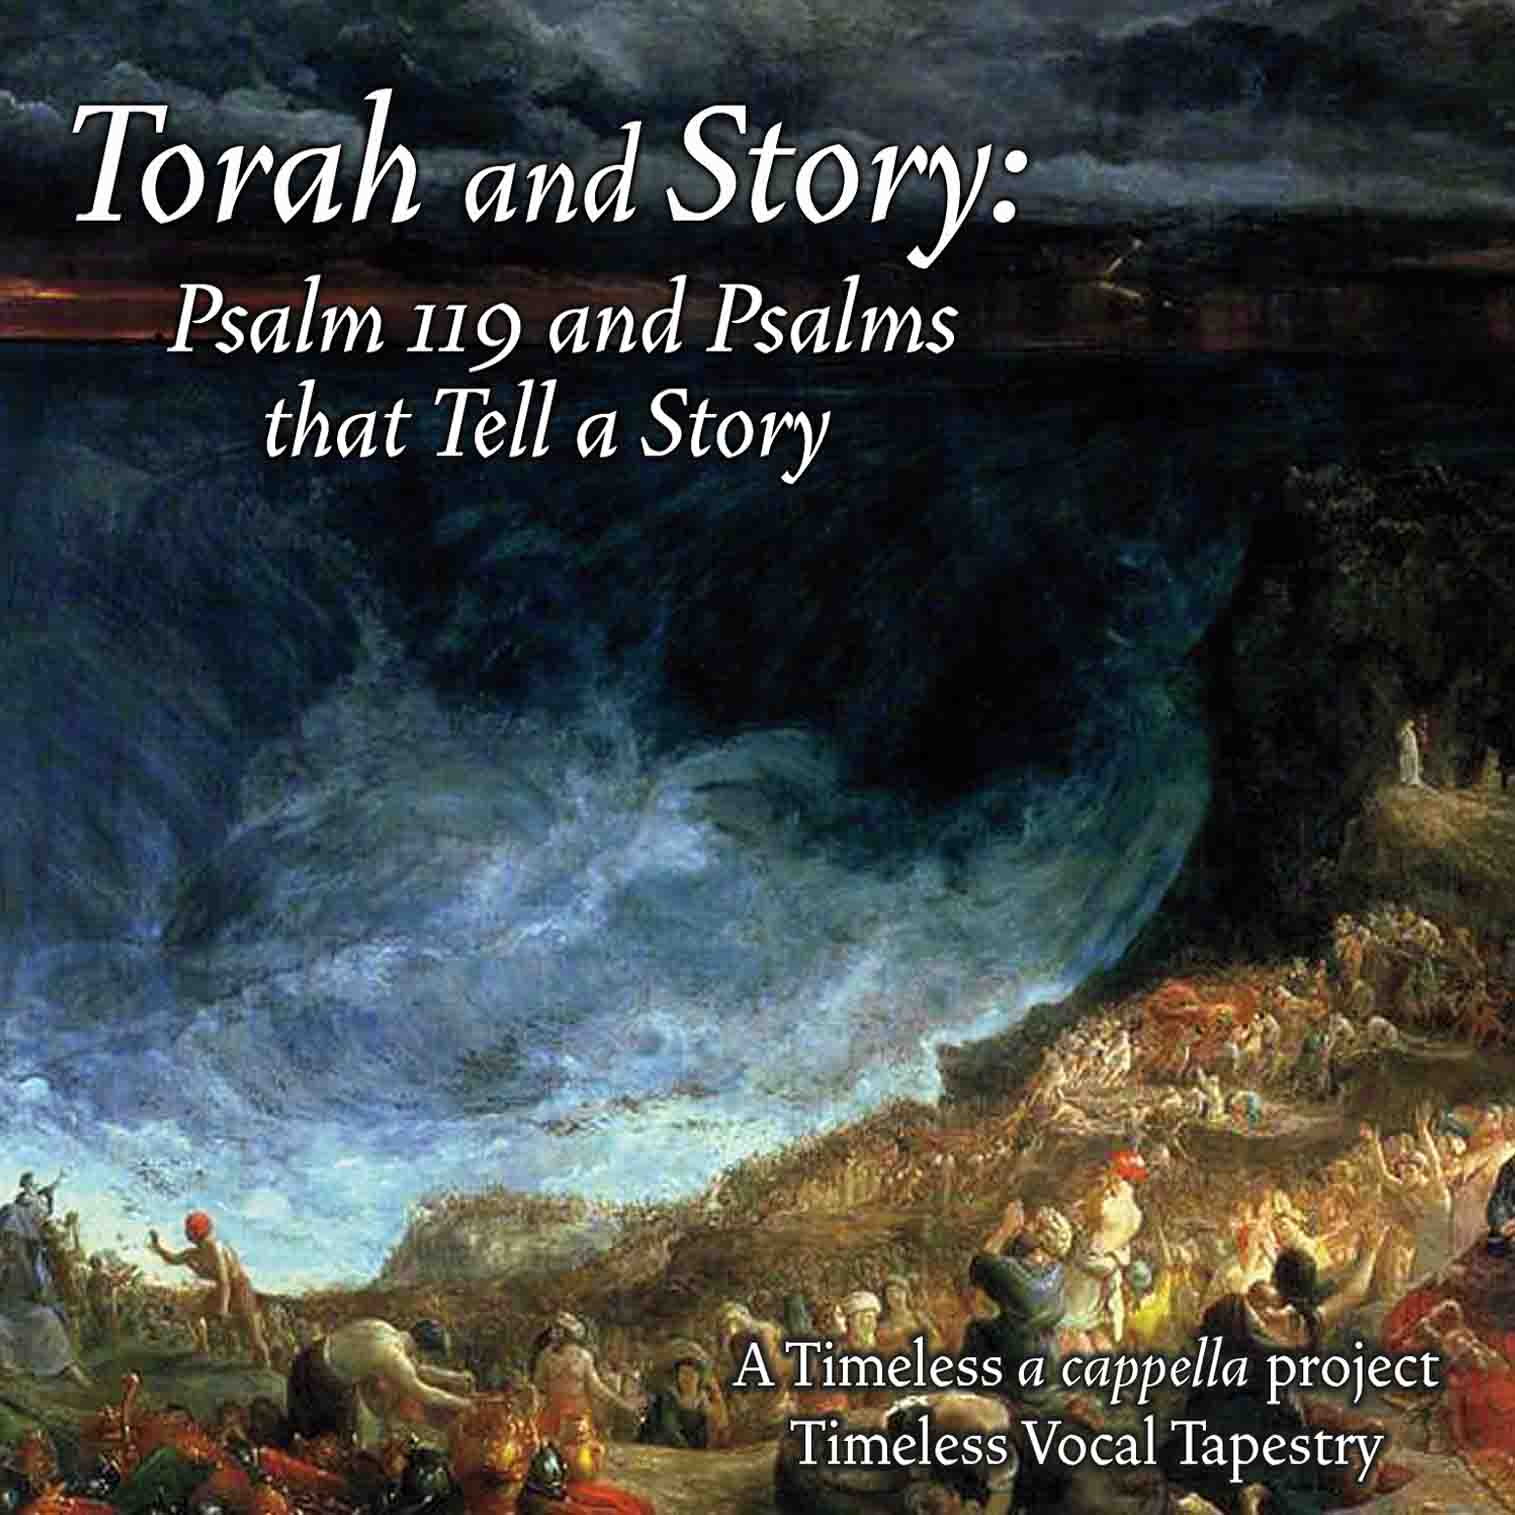 Torah and Story